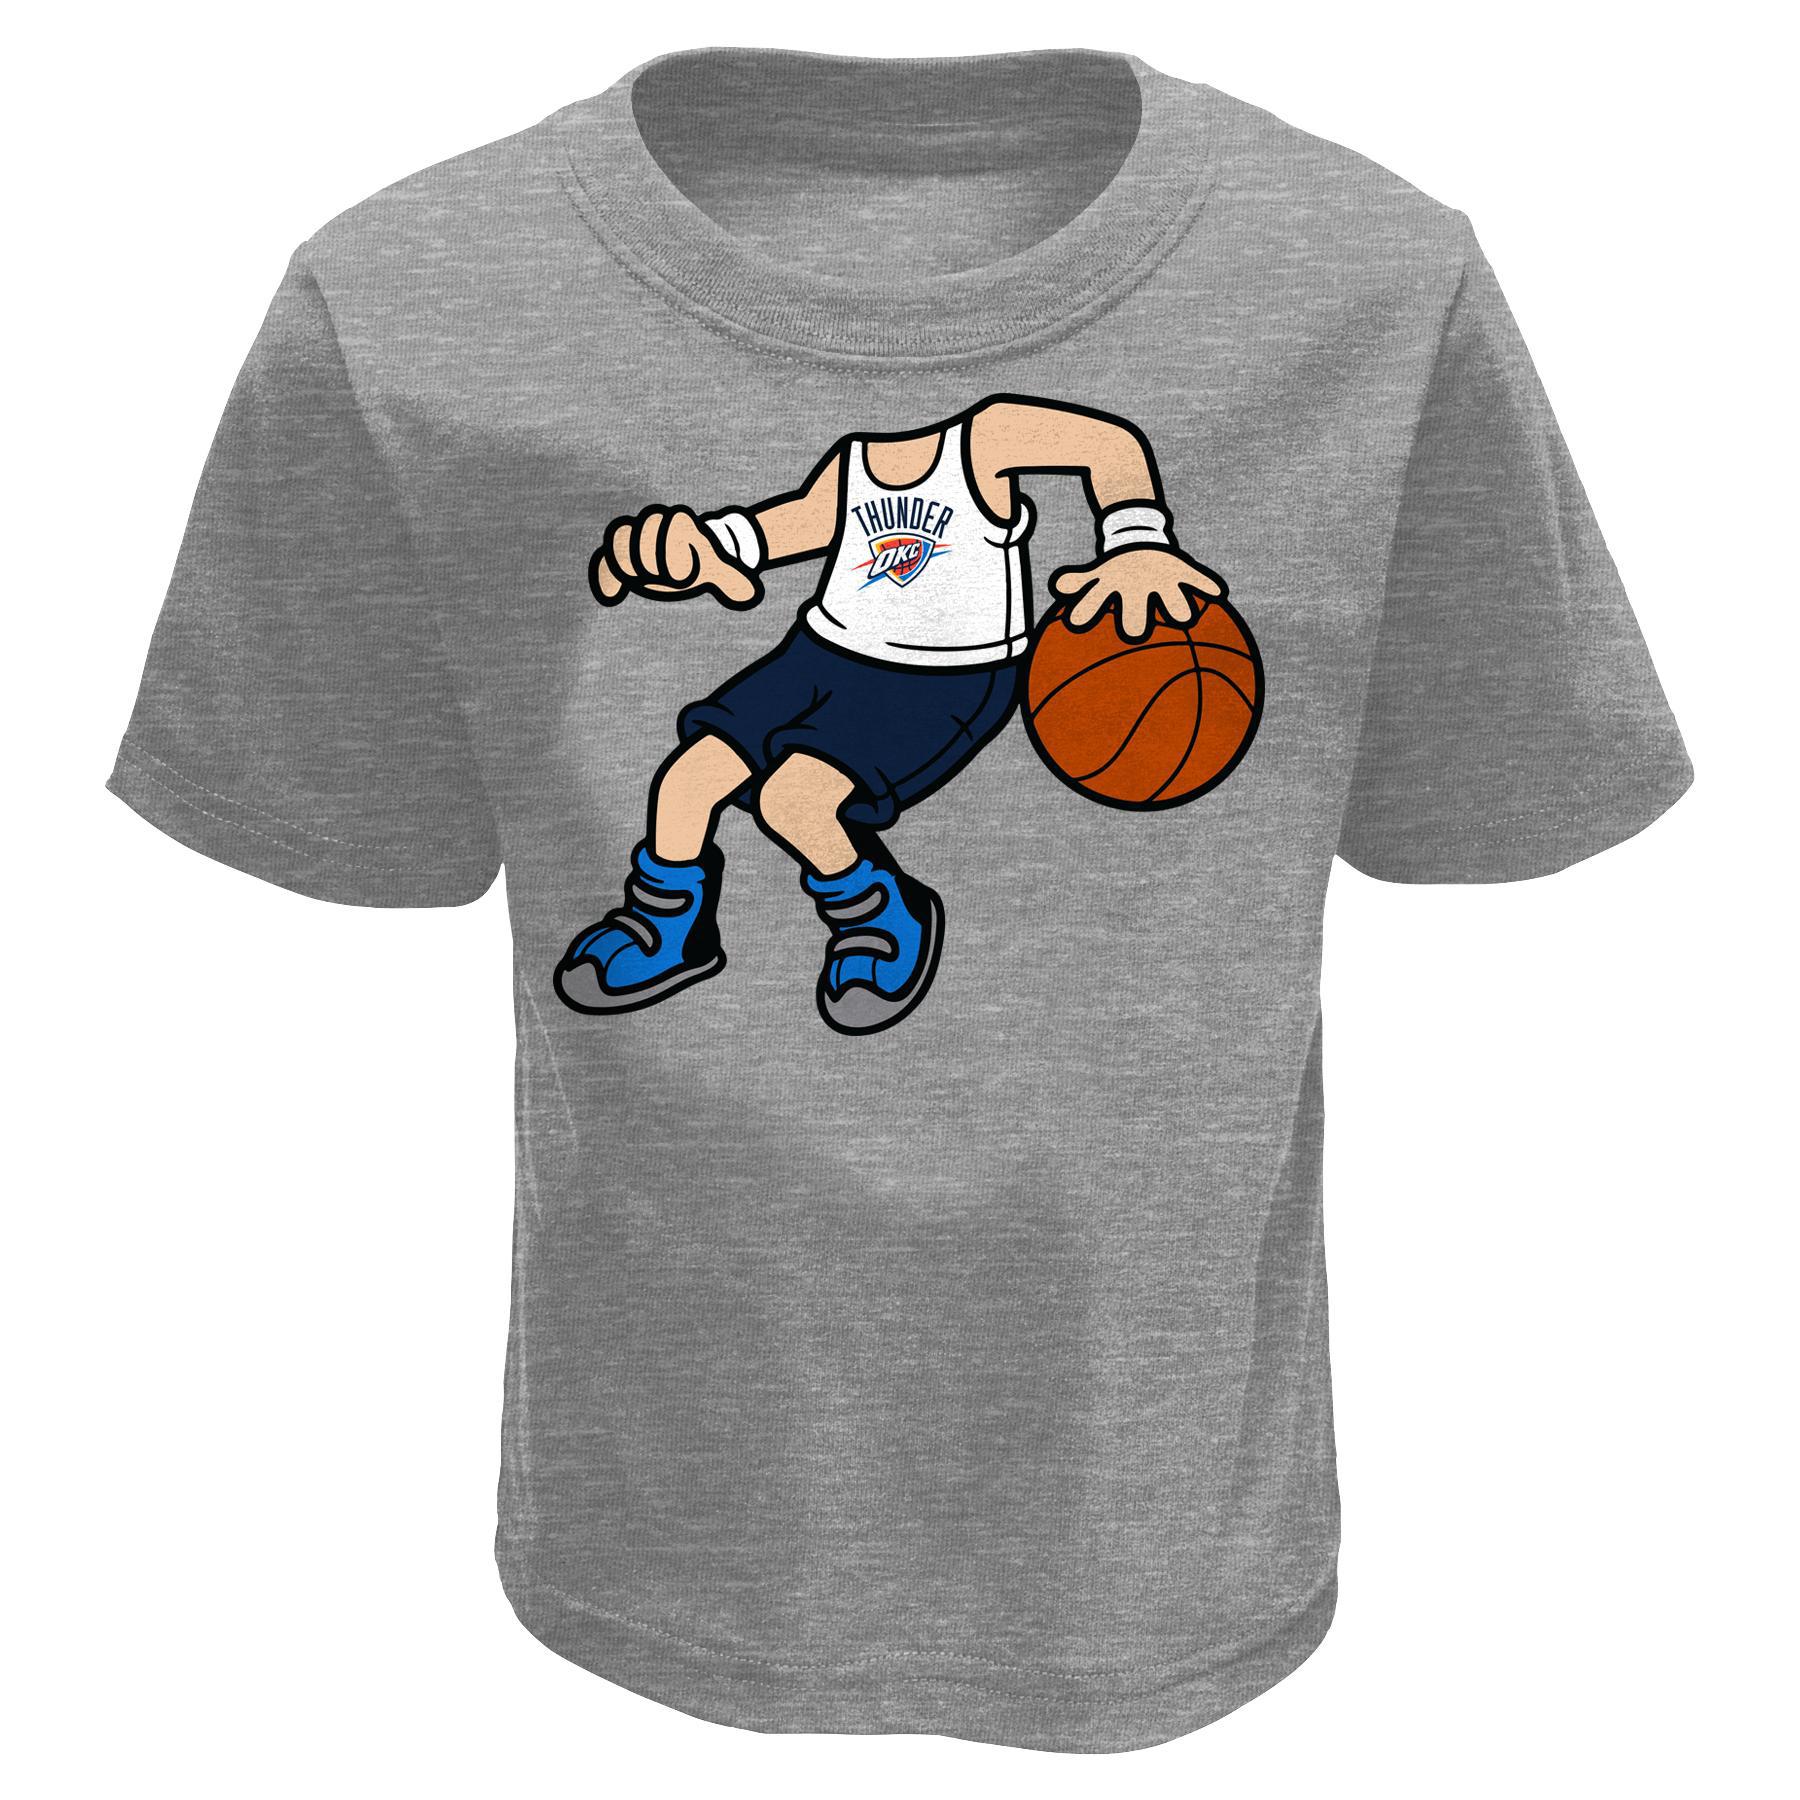 NBA Toddler Boys' Graphic T-Shirt - Oklahoma City Thunder